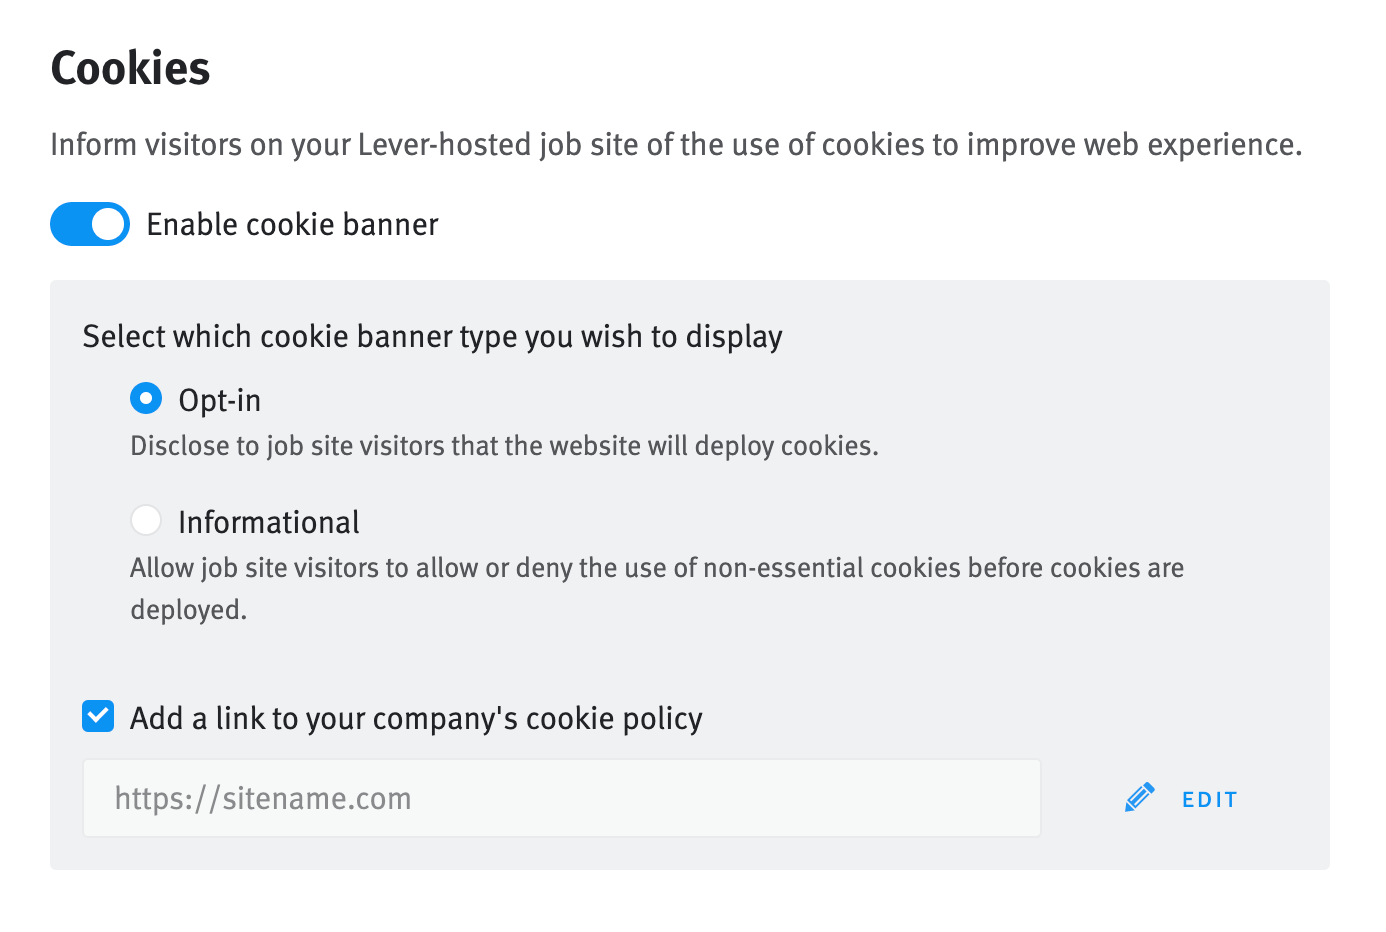 Cookie banner configuration tile